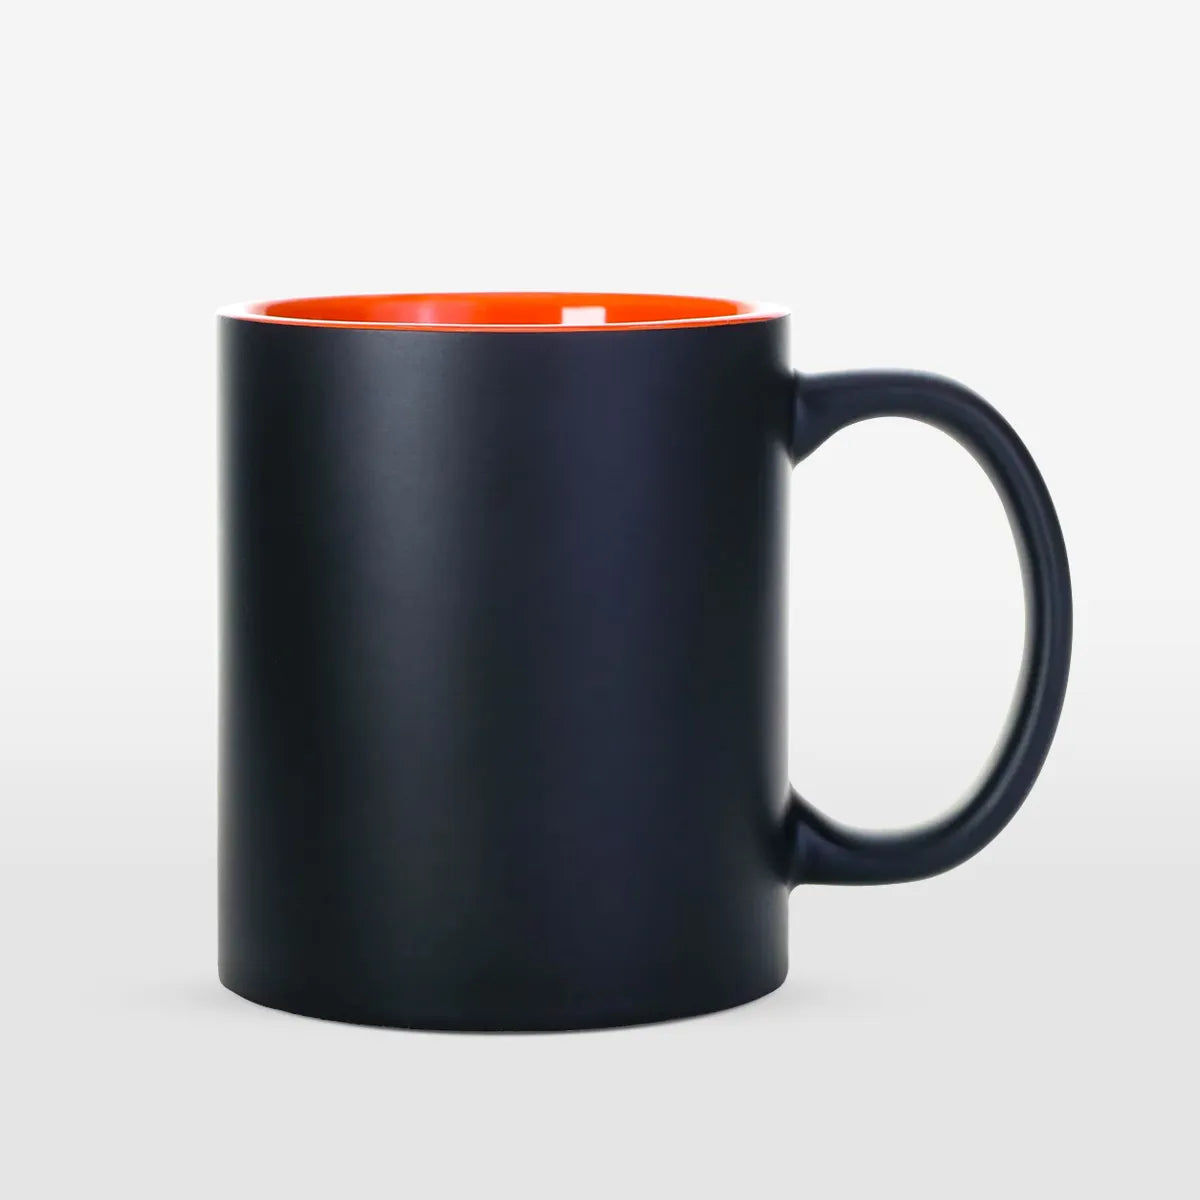 Ricoma Mug Heat Press w/ Digital Touchscreen